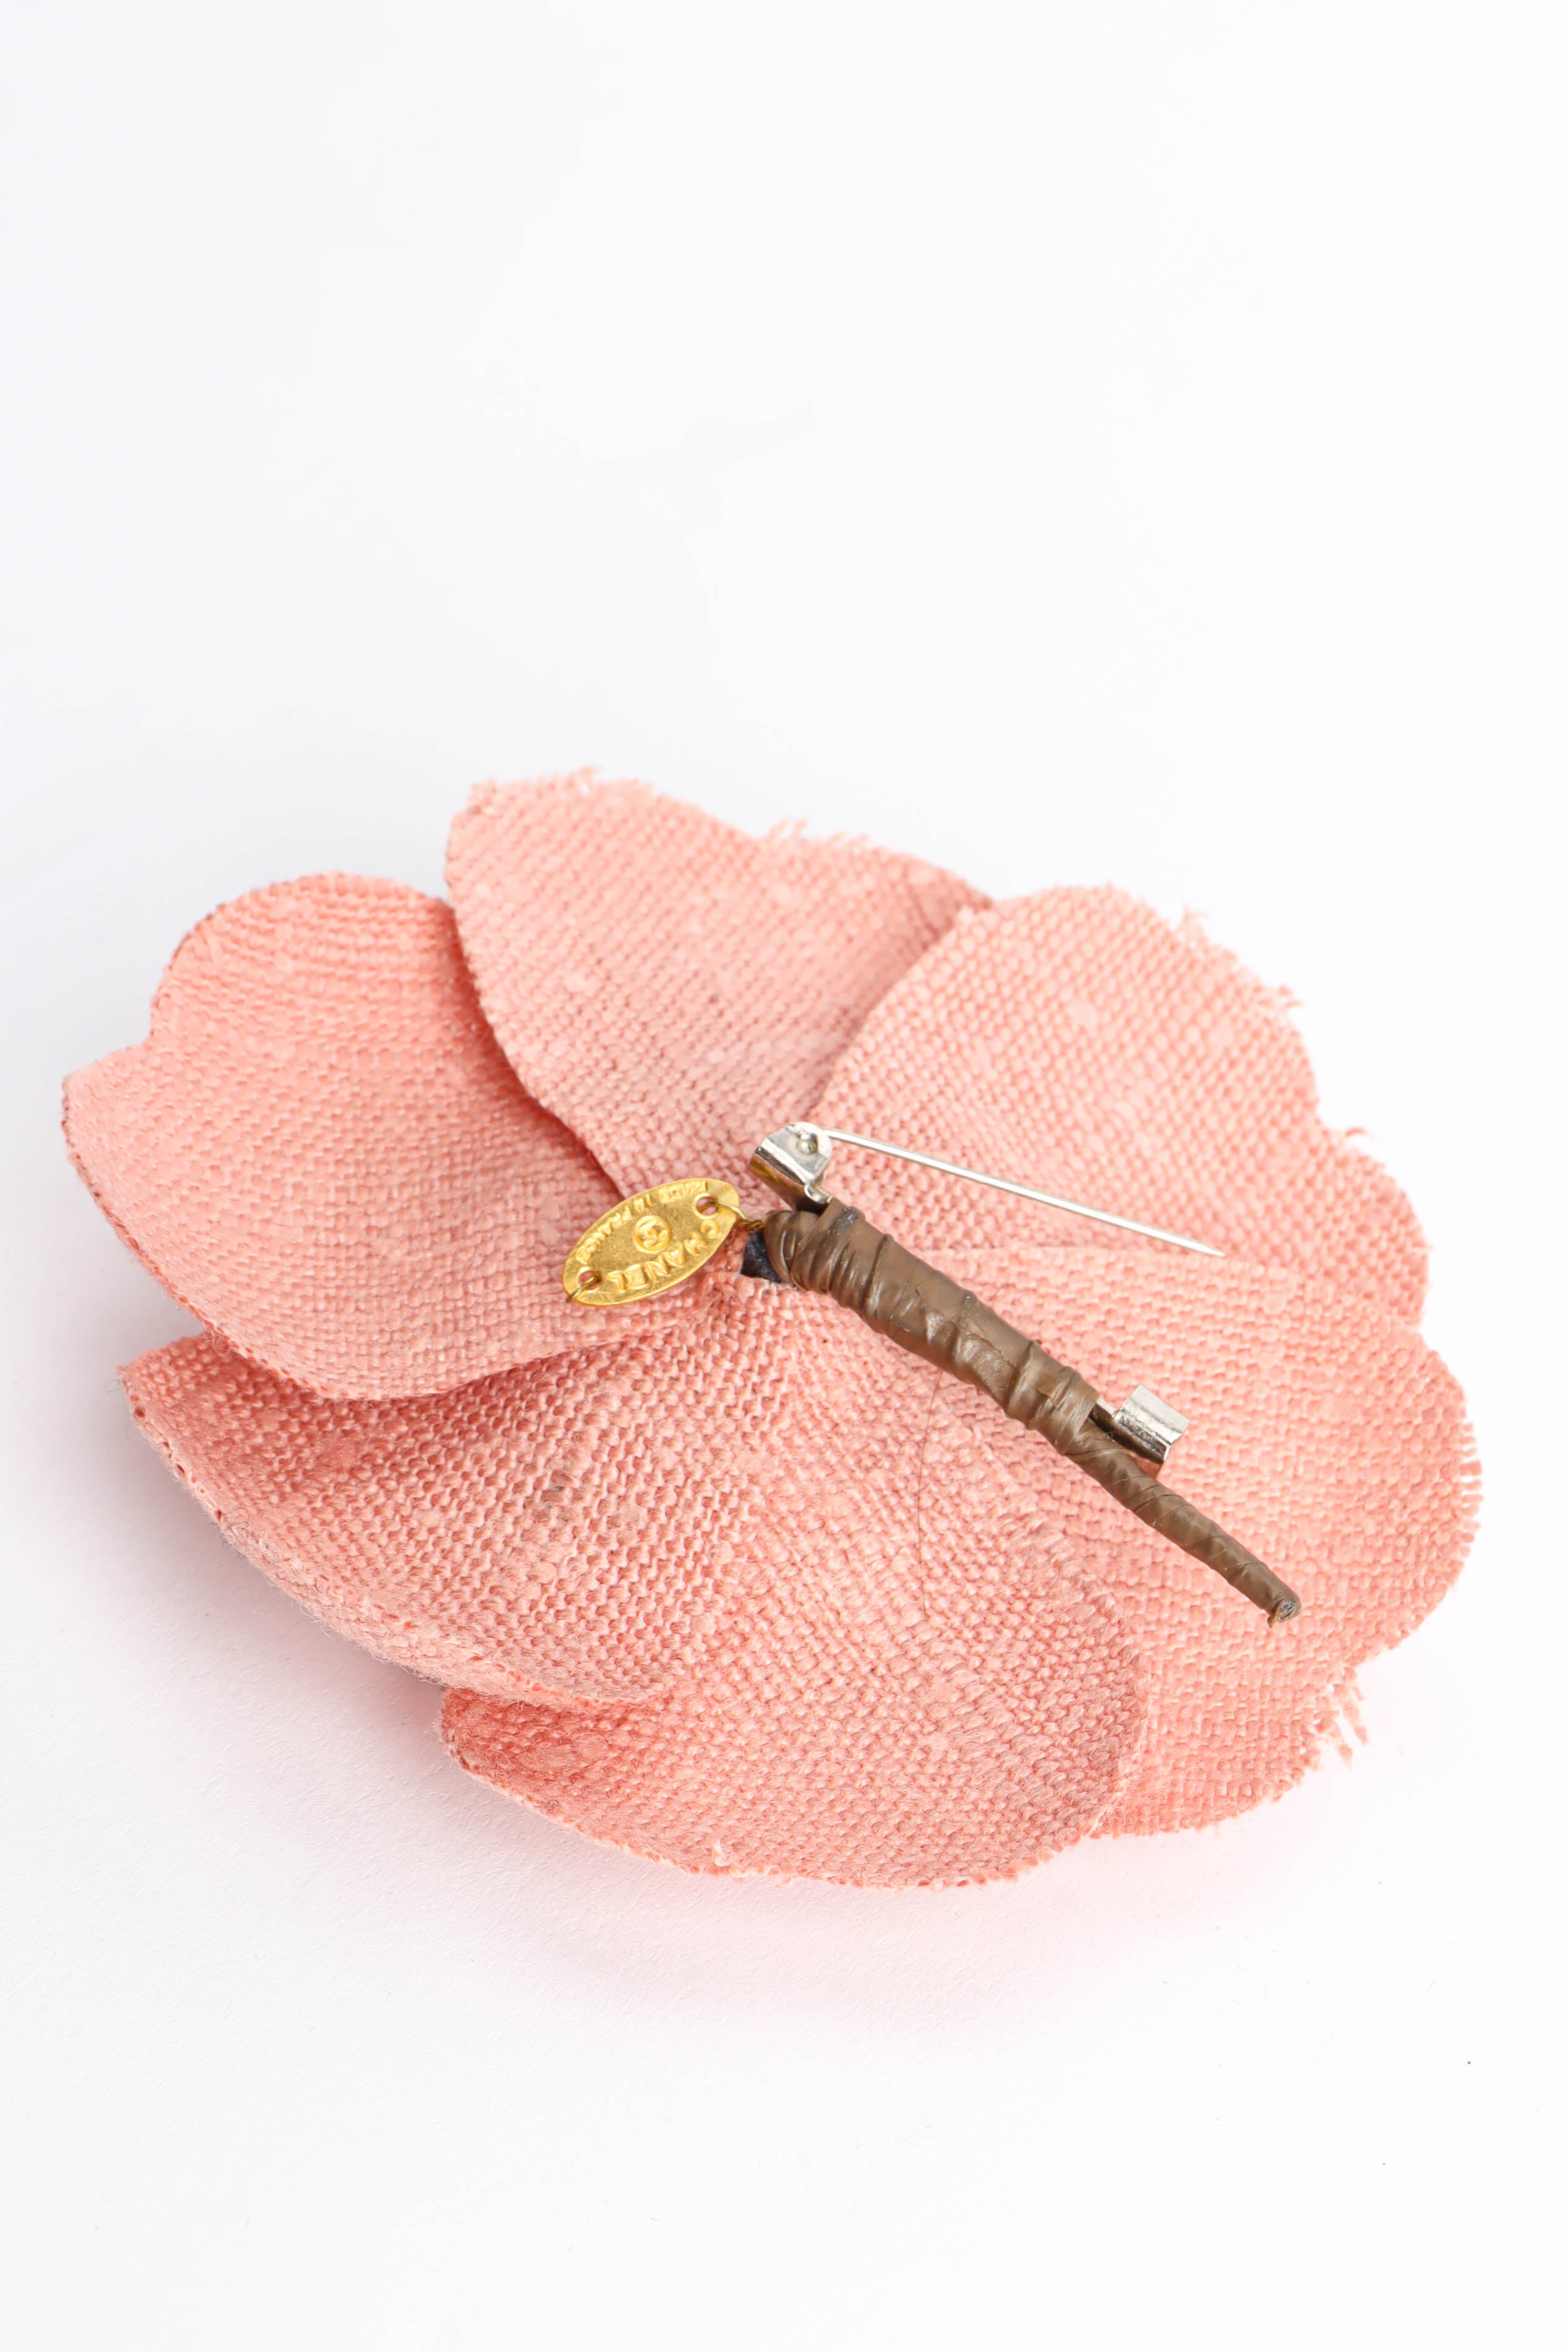 Vintage Chanel Linen Camellia Flower Pin back @ Recess Los Angeles